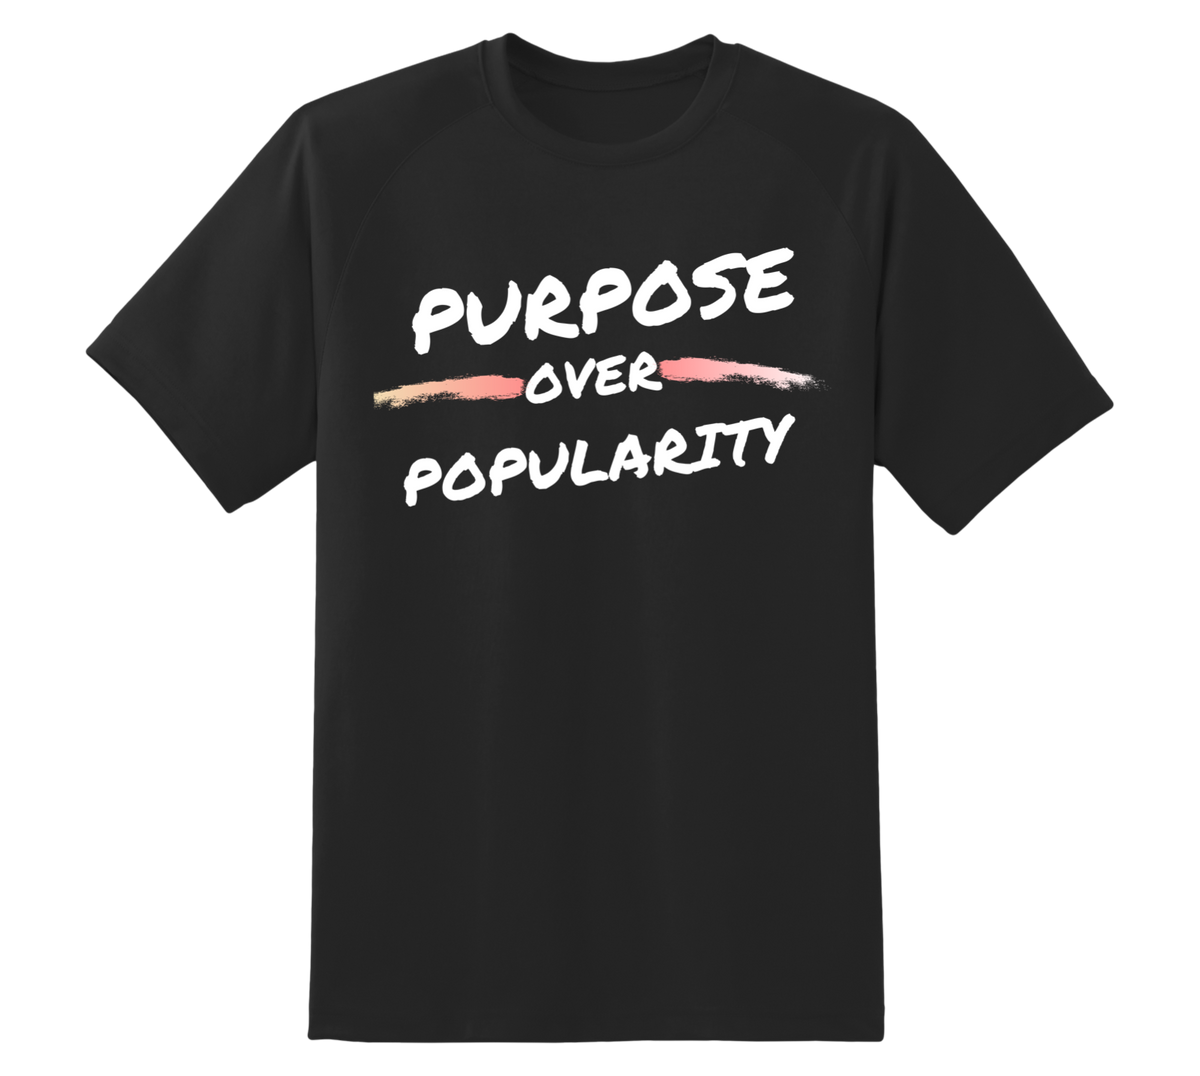 “Purpose Over Popularity” - T-shirt